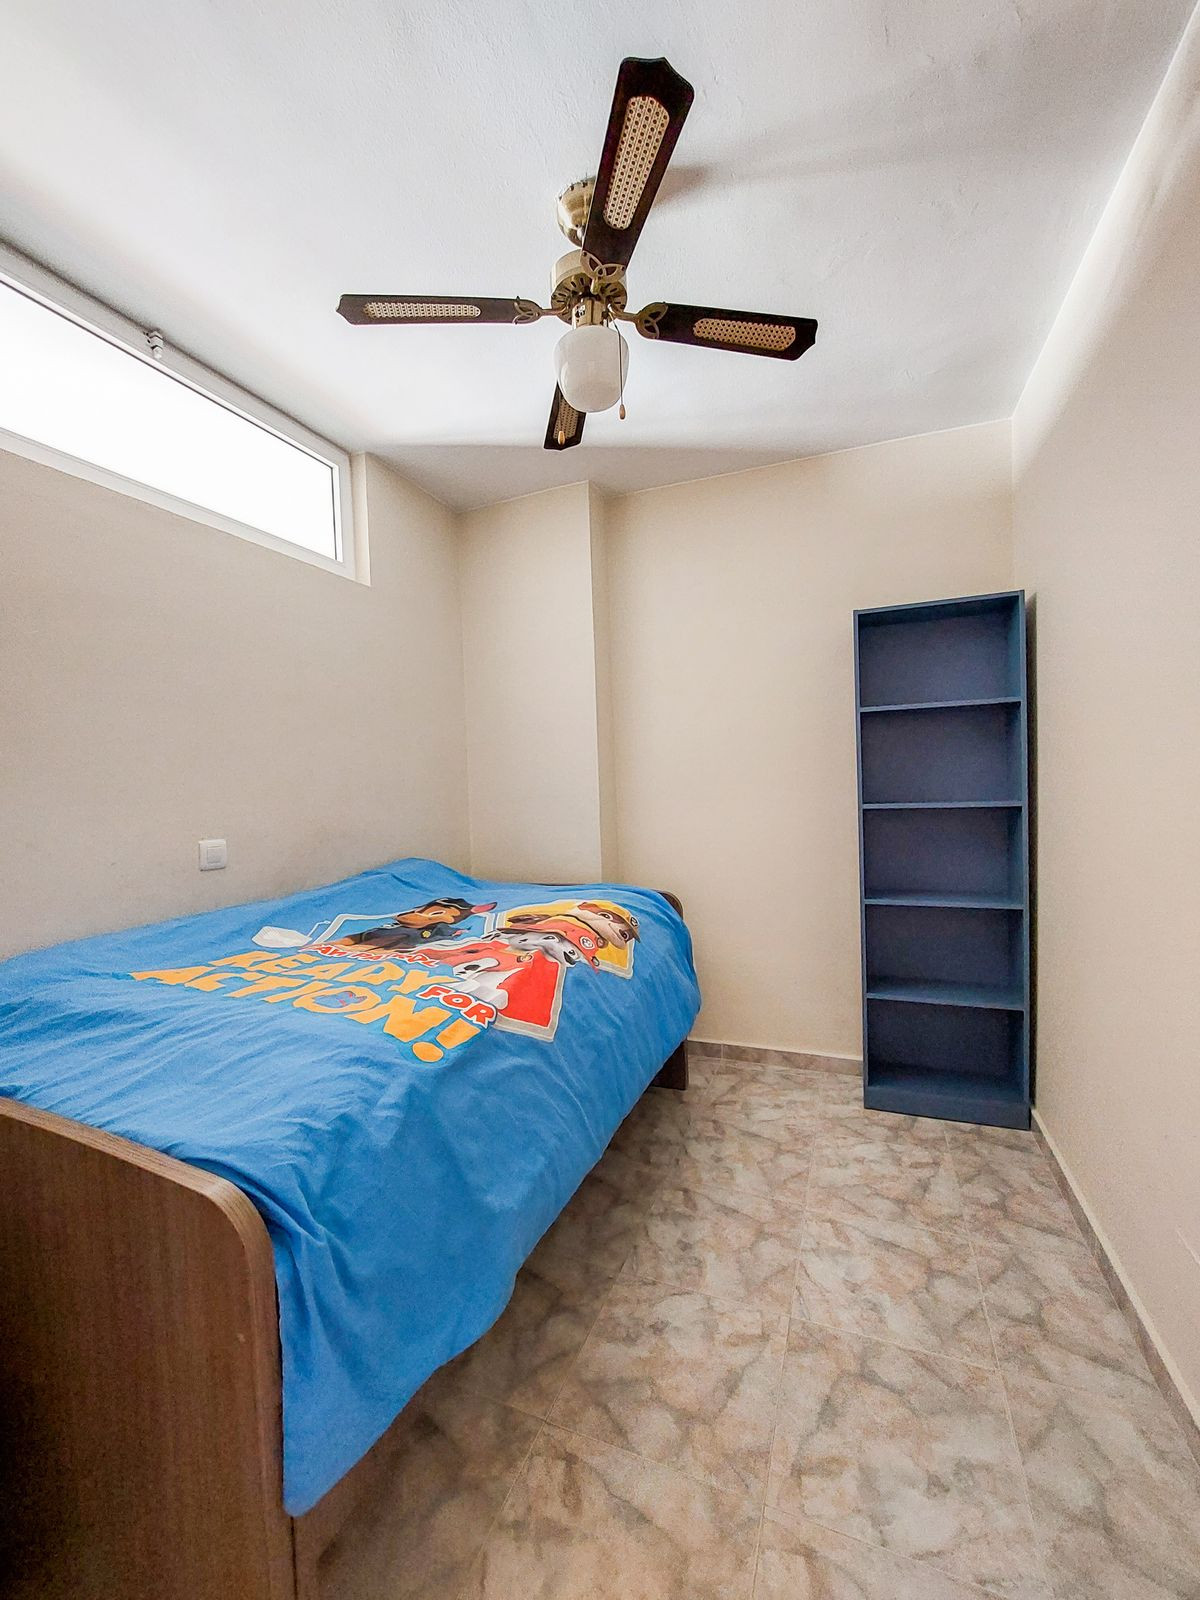 2 bedroom Apartment For Sale in El Faro, Málaga - thumb 9